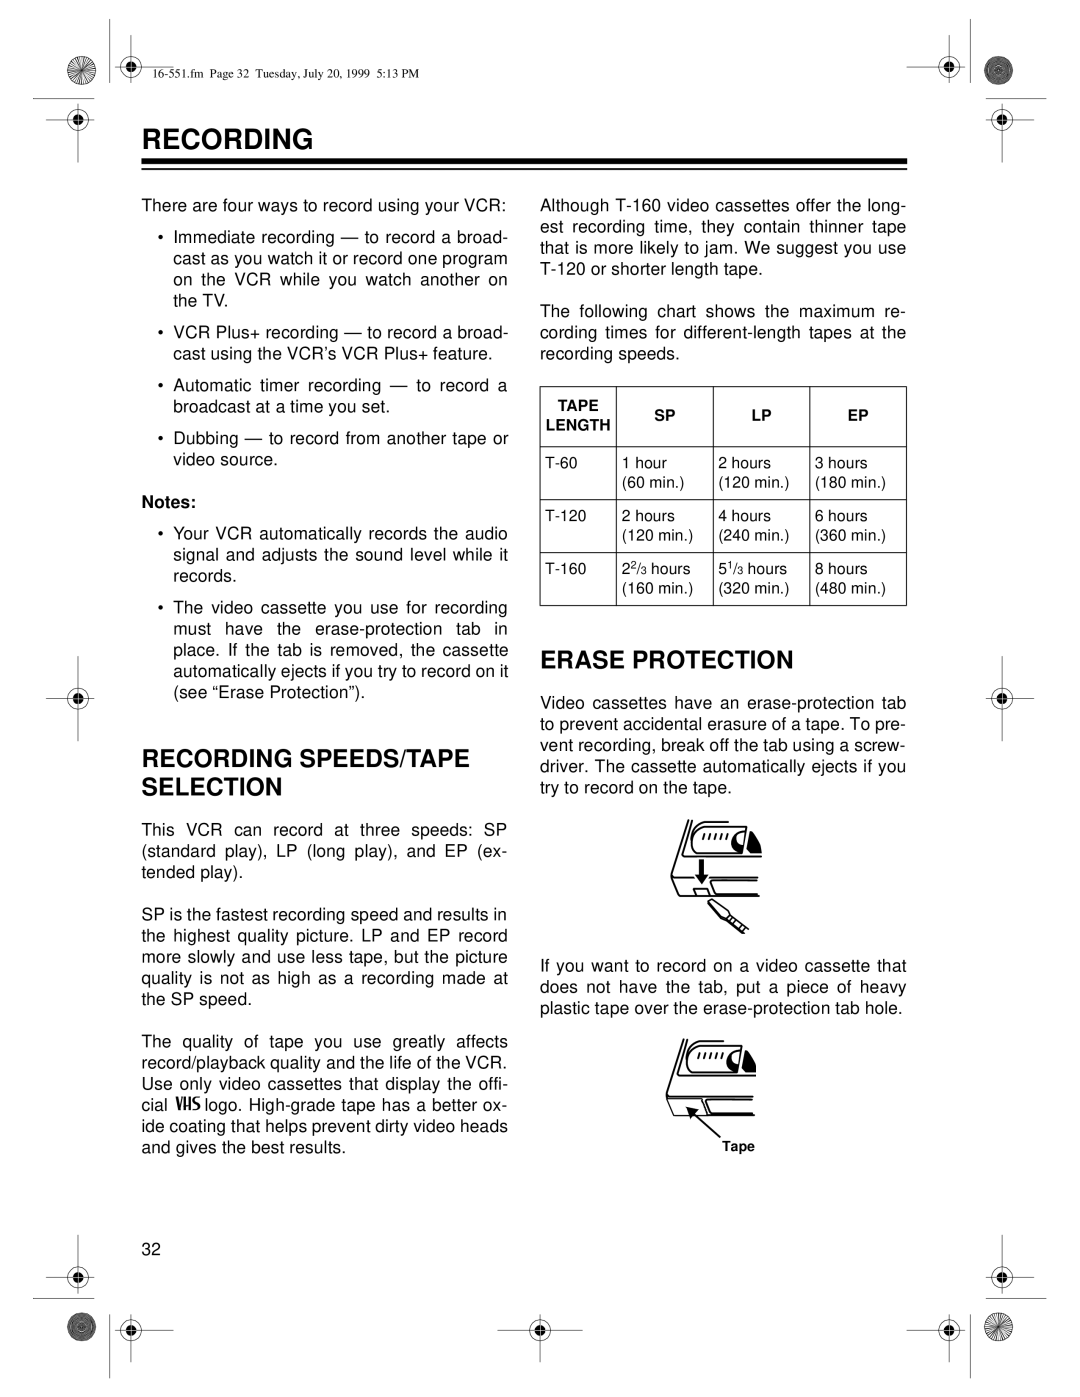 Optimus 63, 114 owner manual Recording Speeds/Tape Selection, Erase Protection 